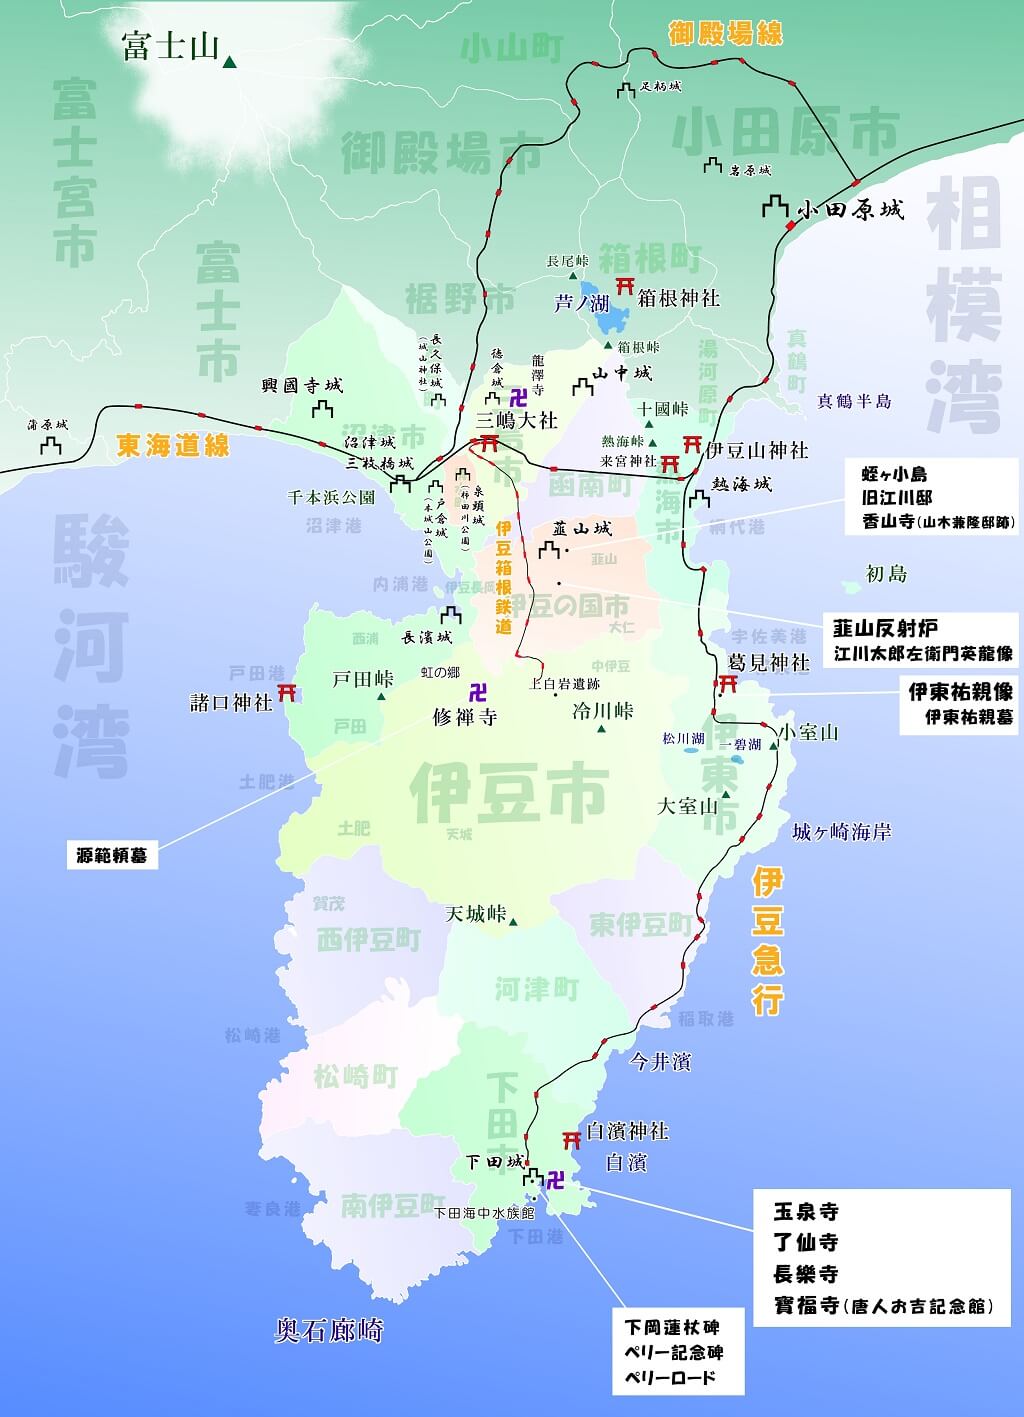 TSUBAKI MAP 伊豆半島